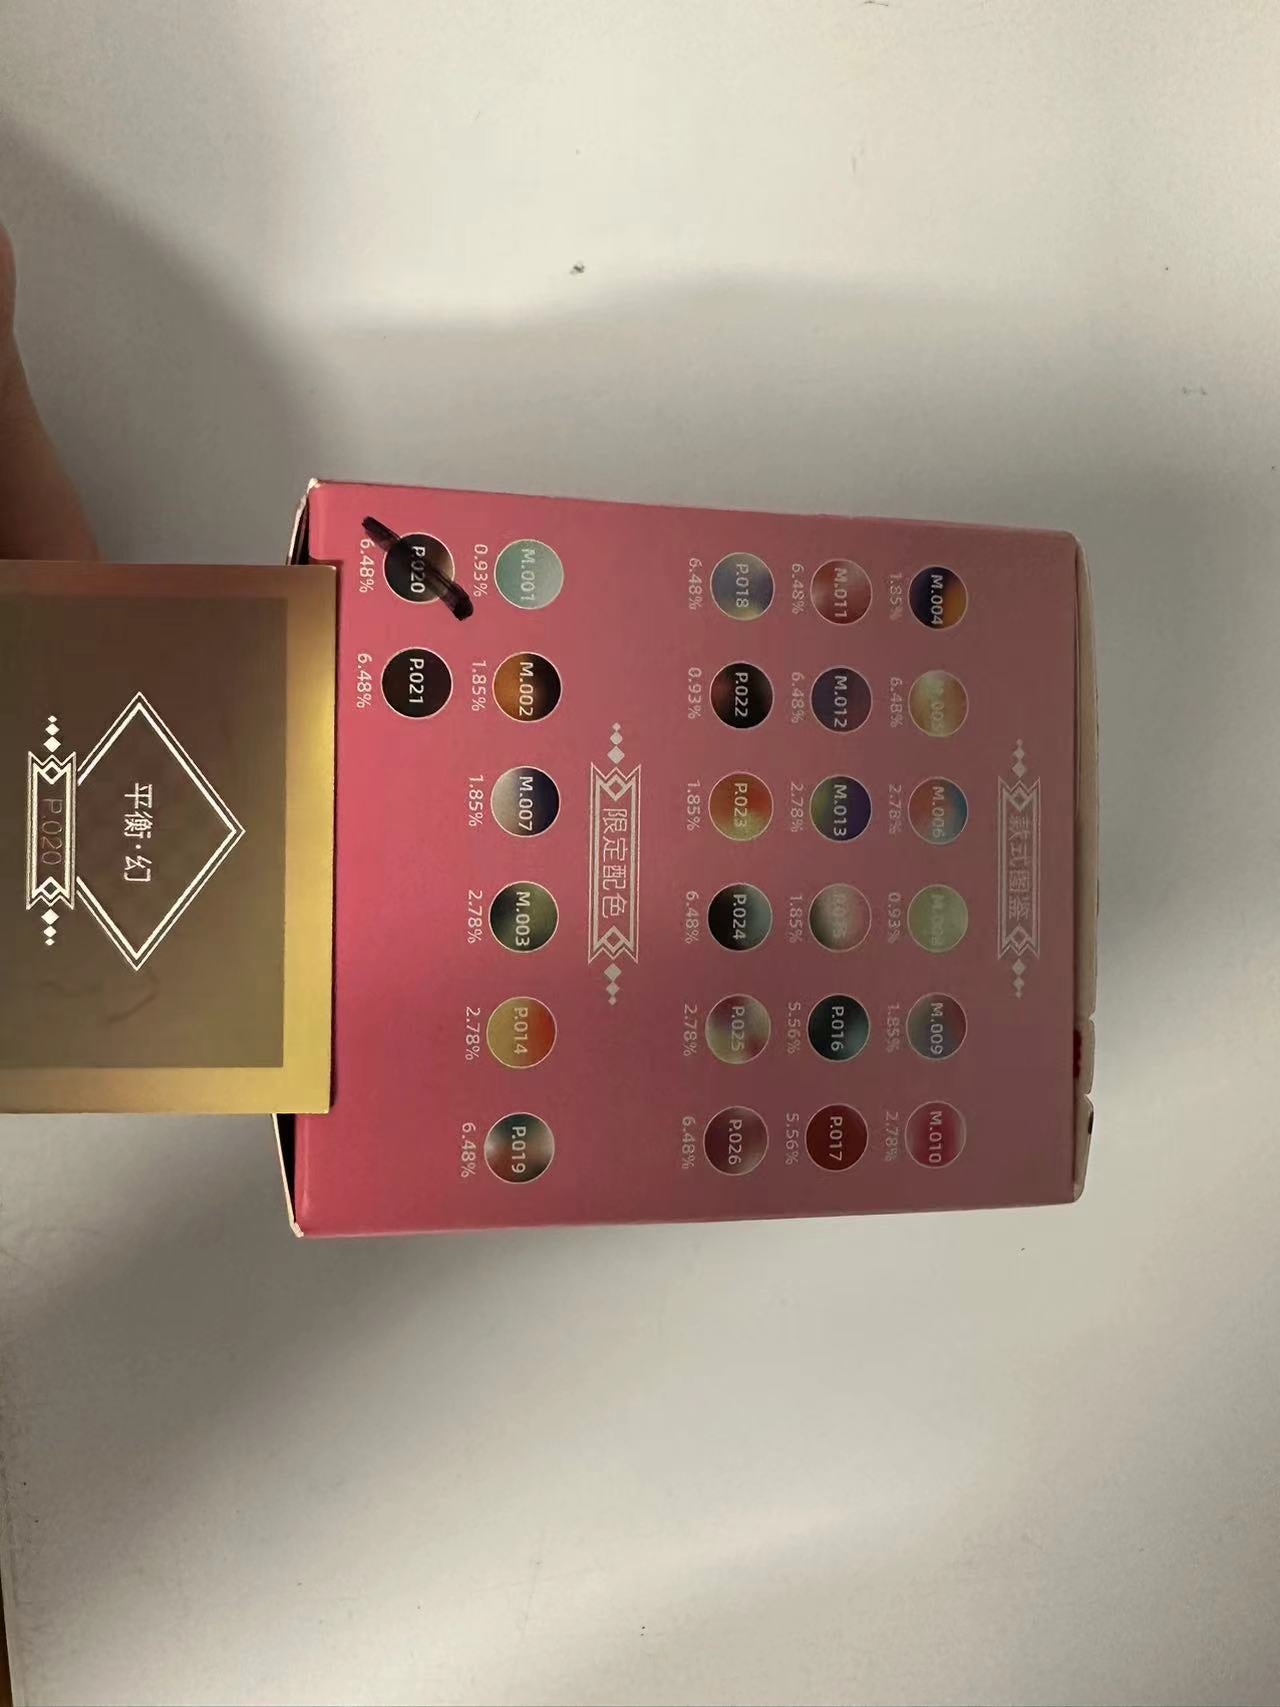 Non-Sanrio Blindbox for sale (VERY GOOD PRICE)